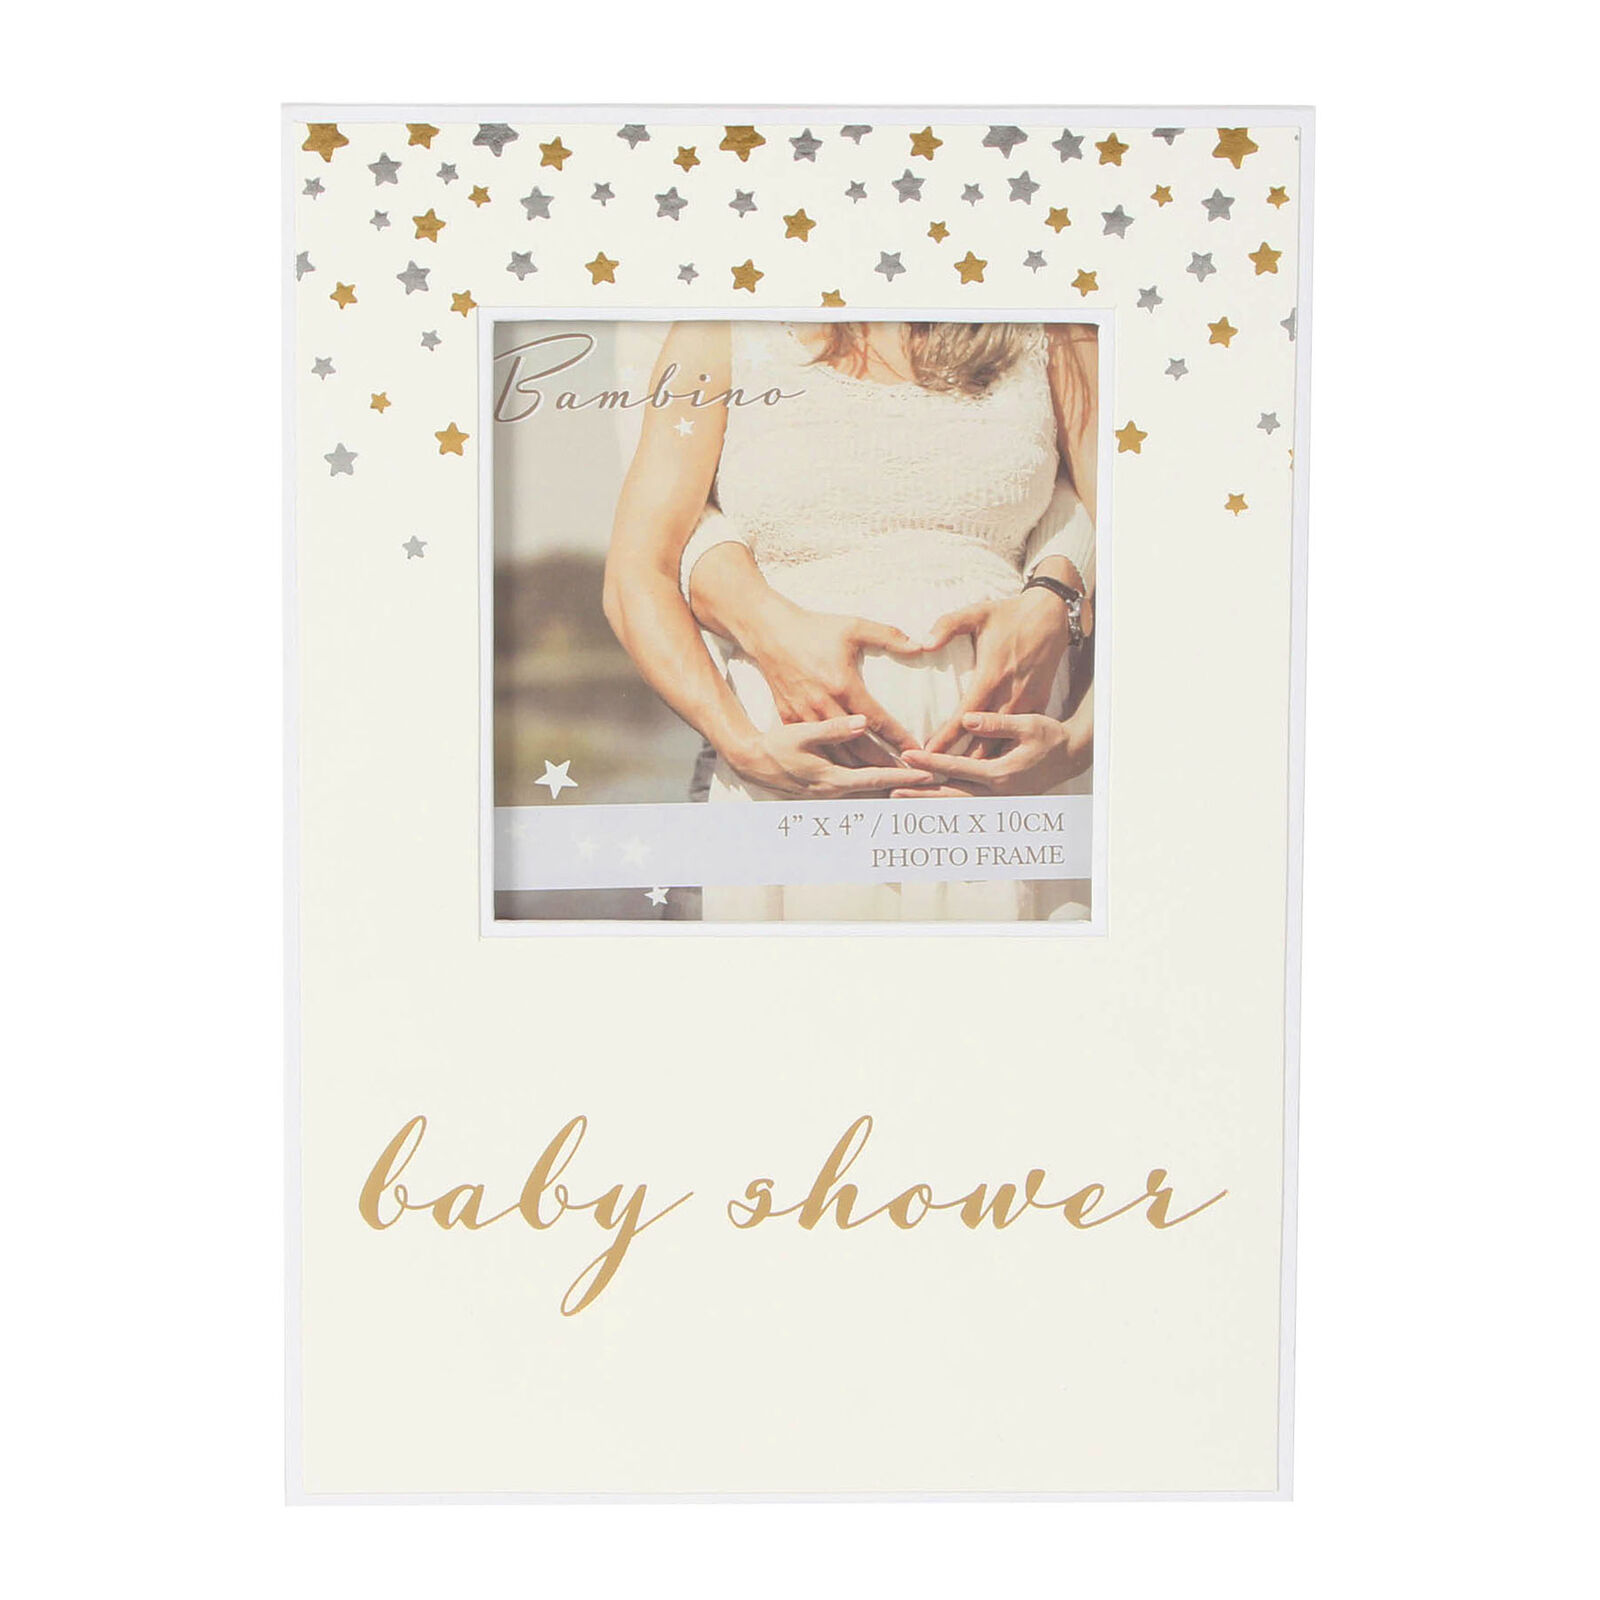 Bambino Baby Shower Paperwrap 4